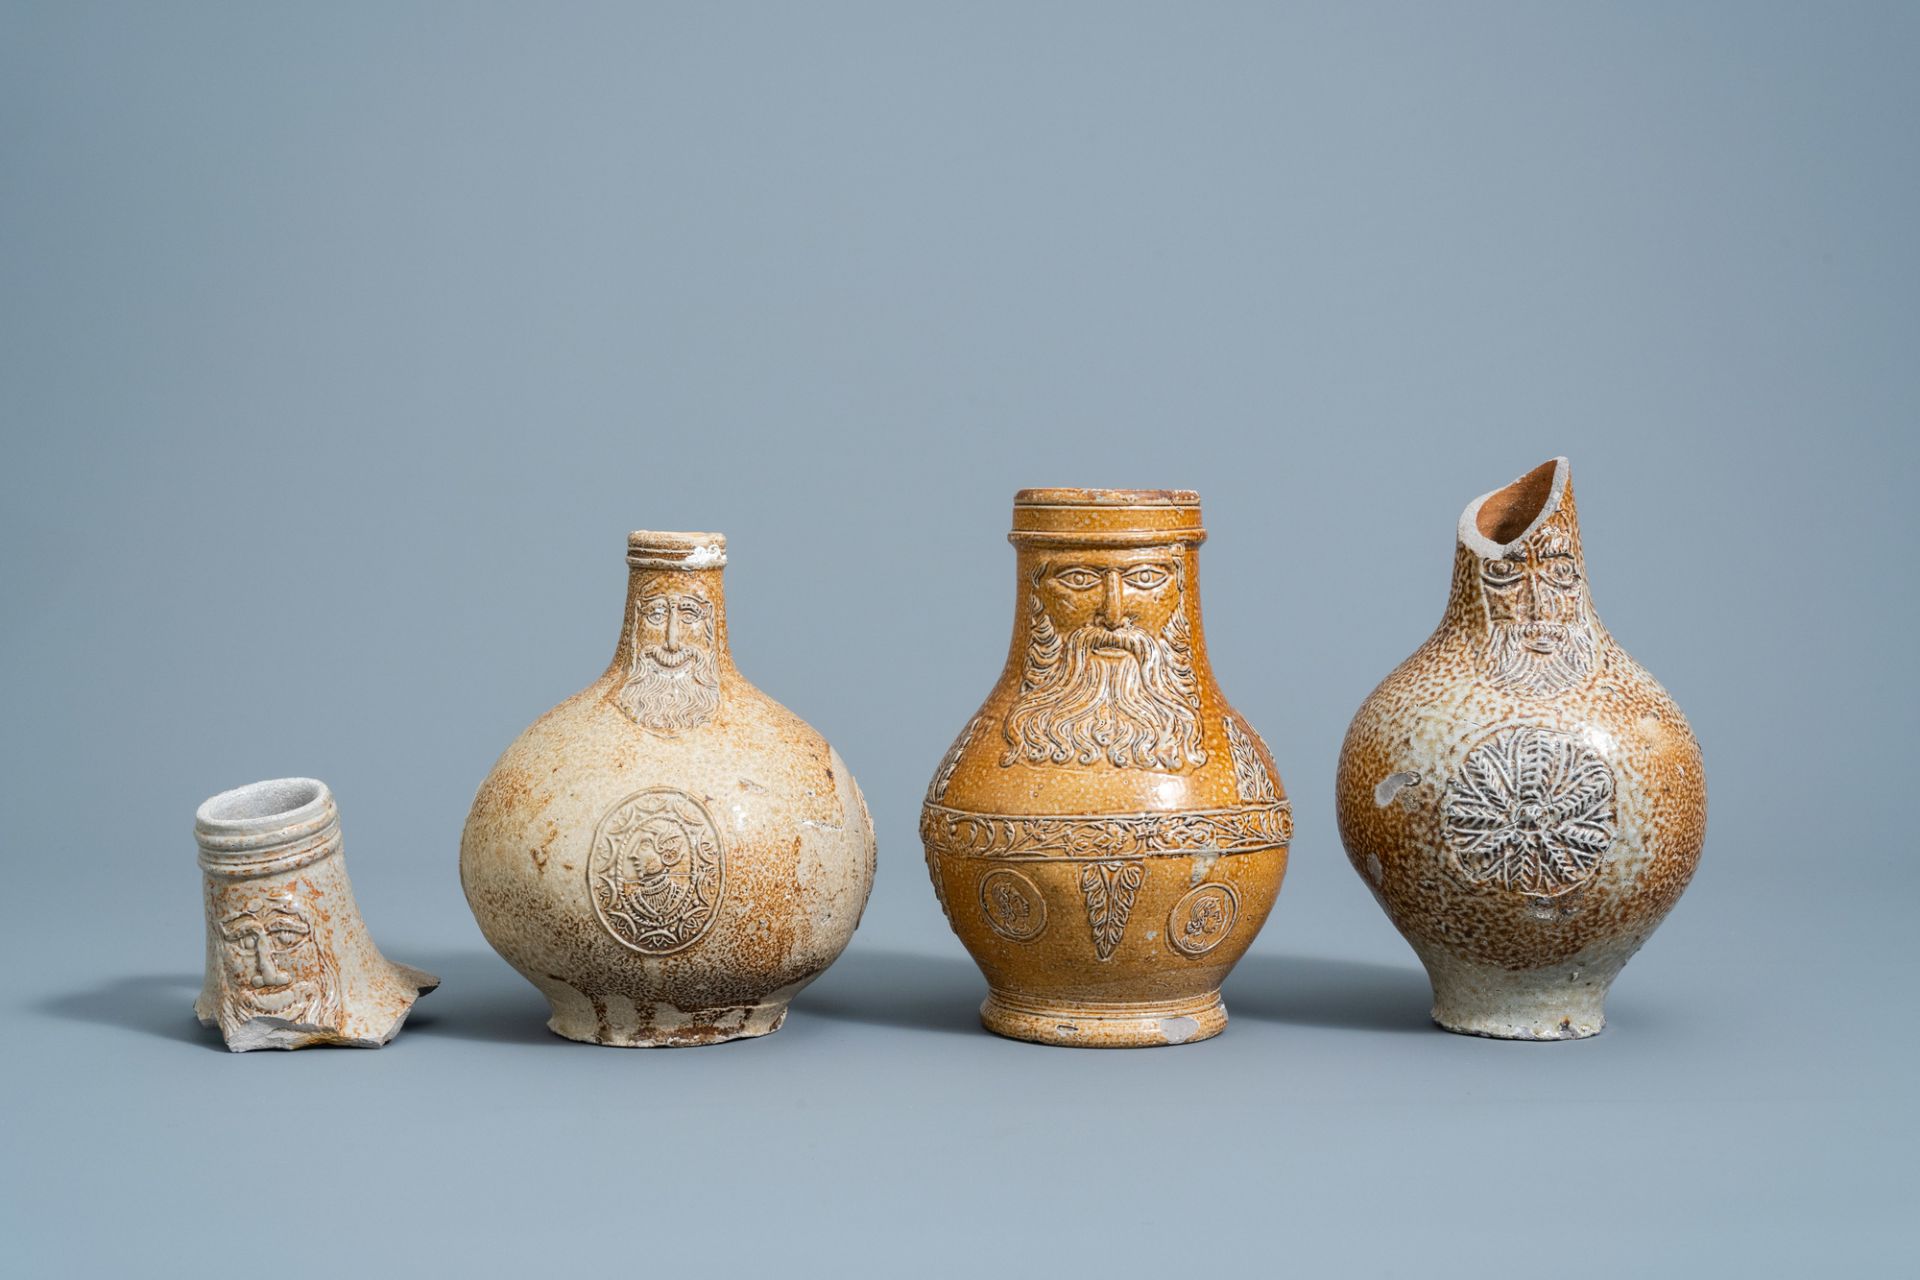 Three German stoneware bellarmine jugs and a neck fragment, 16th/17th C.